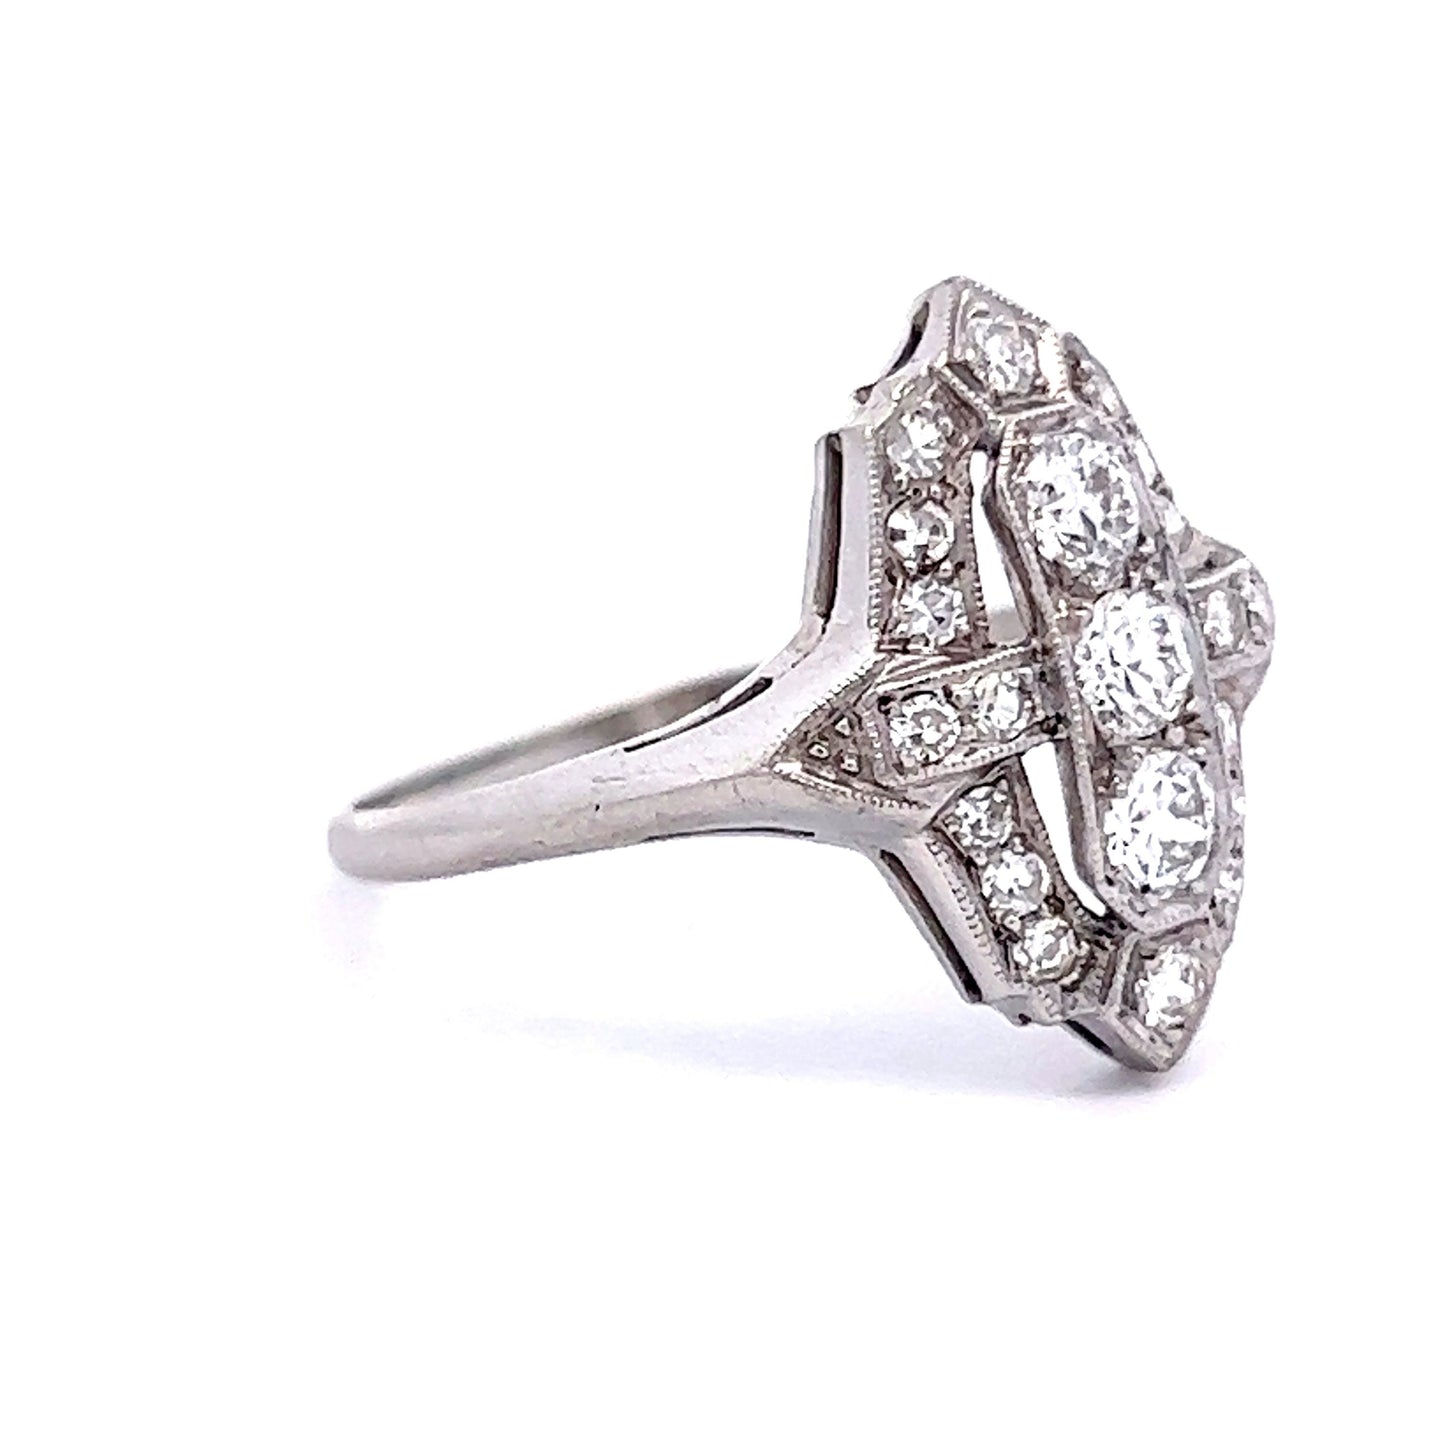 Vintage Art Deco Diamond Cocktail Ring in Platinum